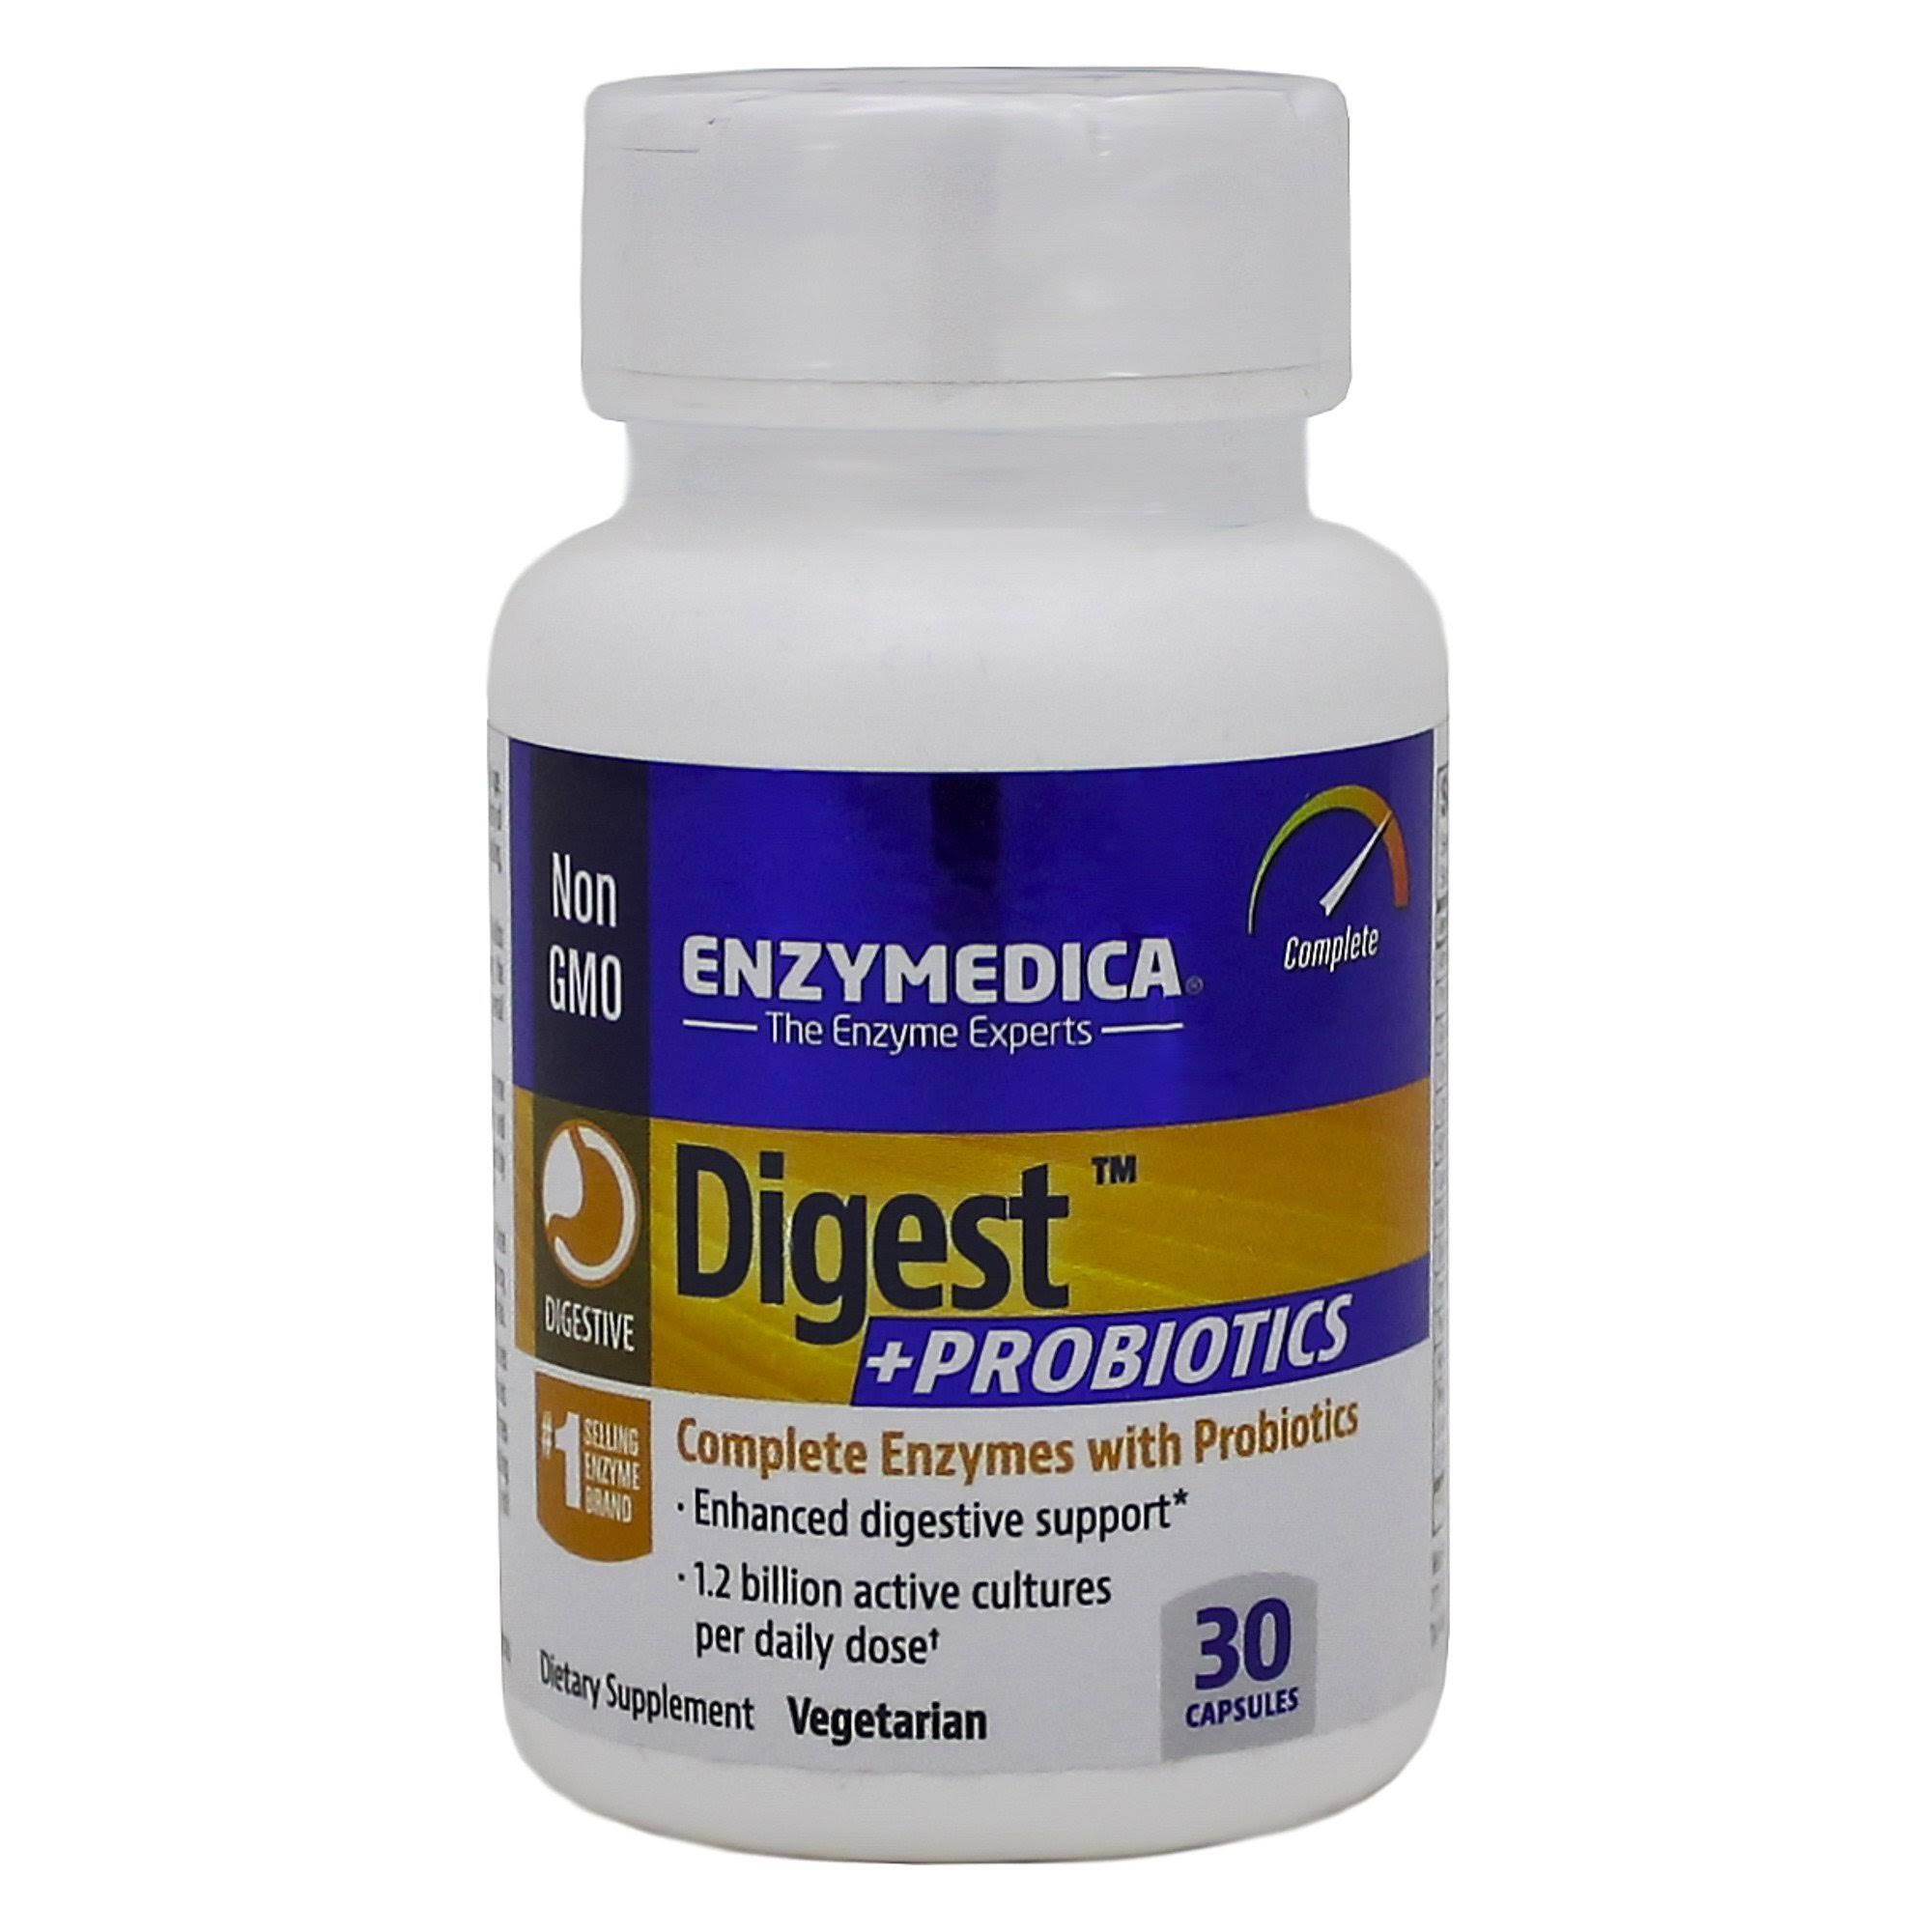 Enzymedica Digest Probiotics - 30 Capsules